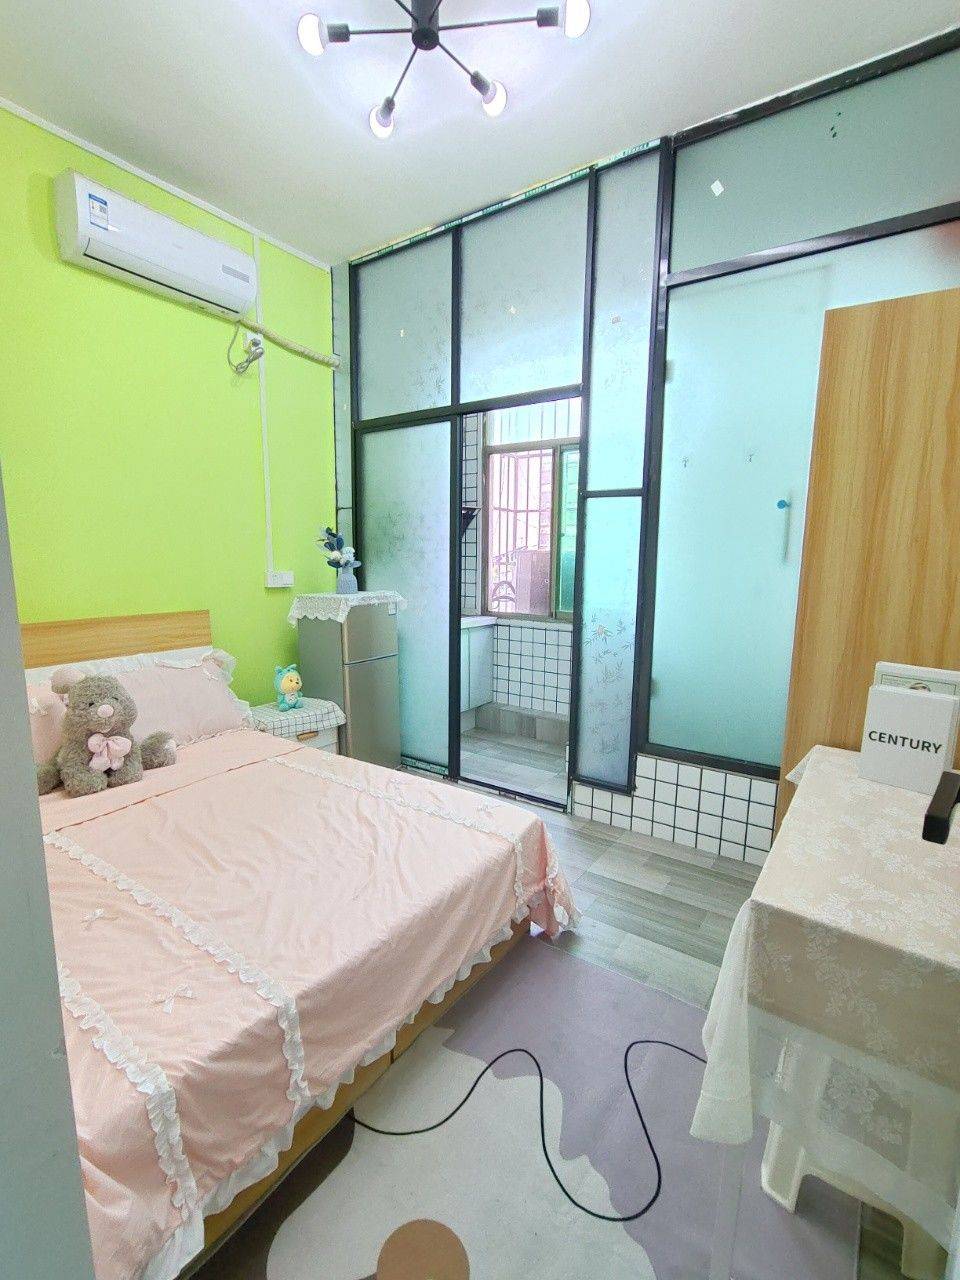 Changsha-Yuelu-Cozy Home,Clean&Comfy,No Gender Limit,Chilled,Pet Friendly